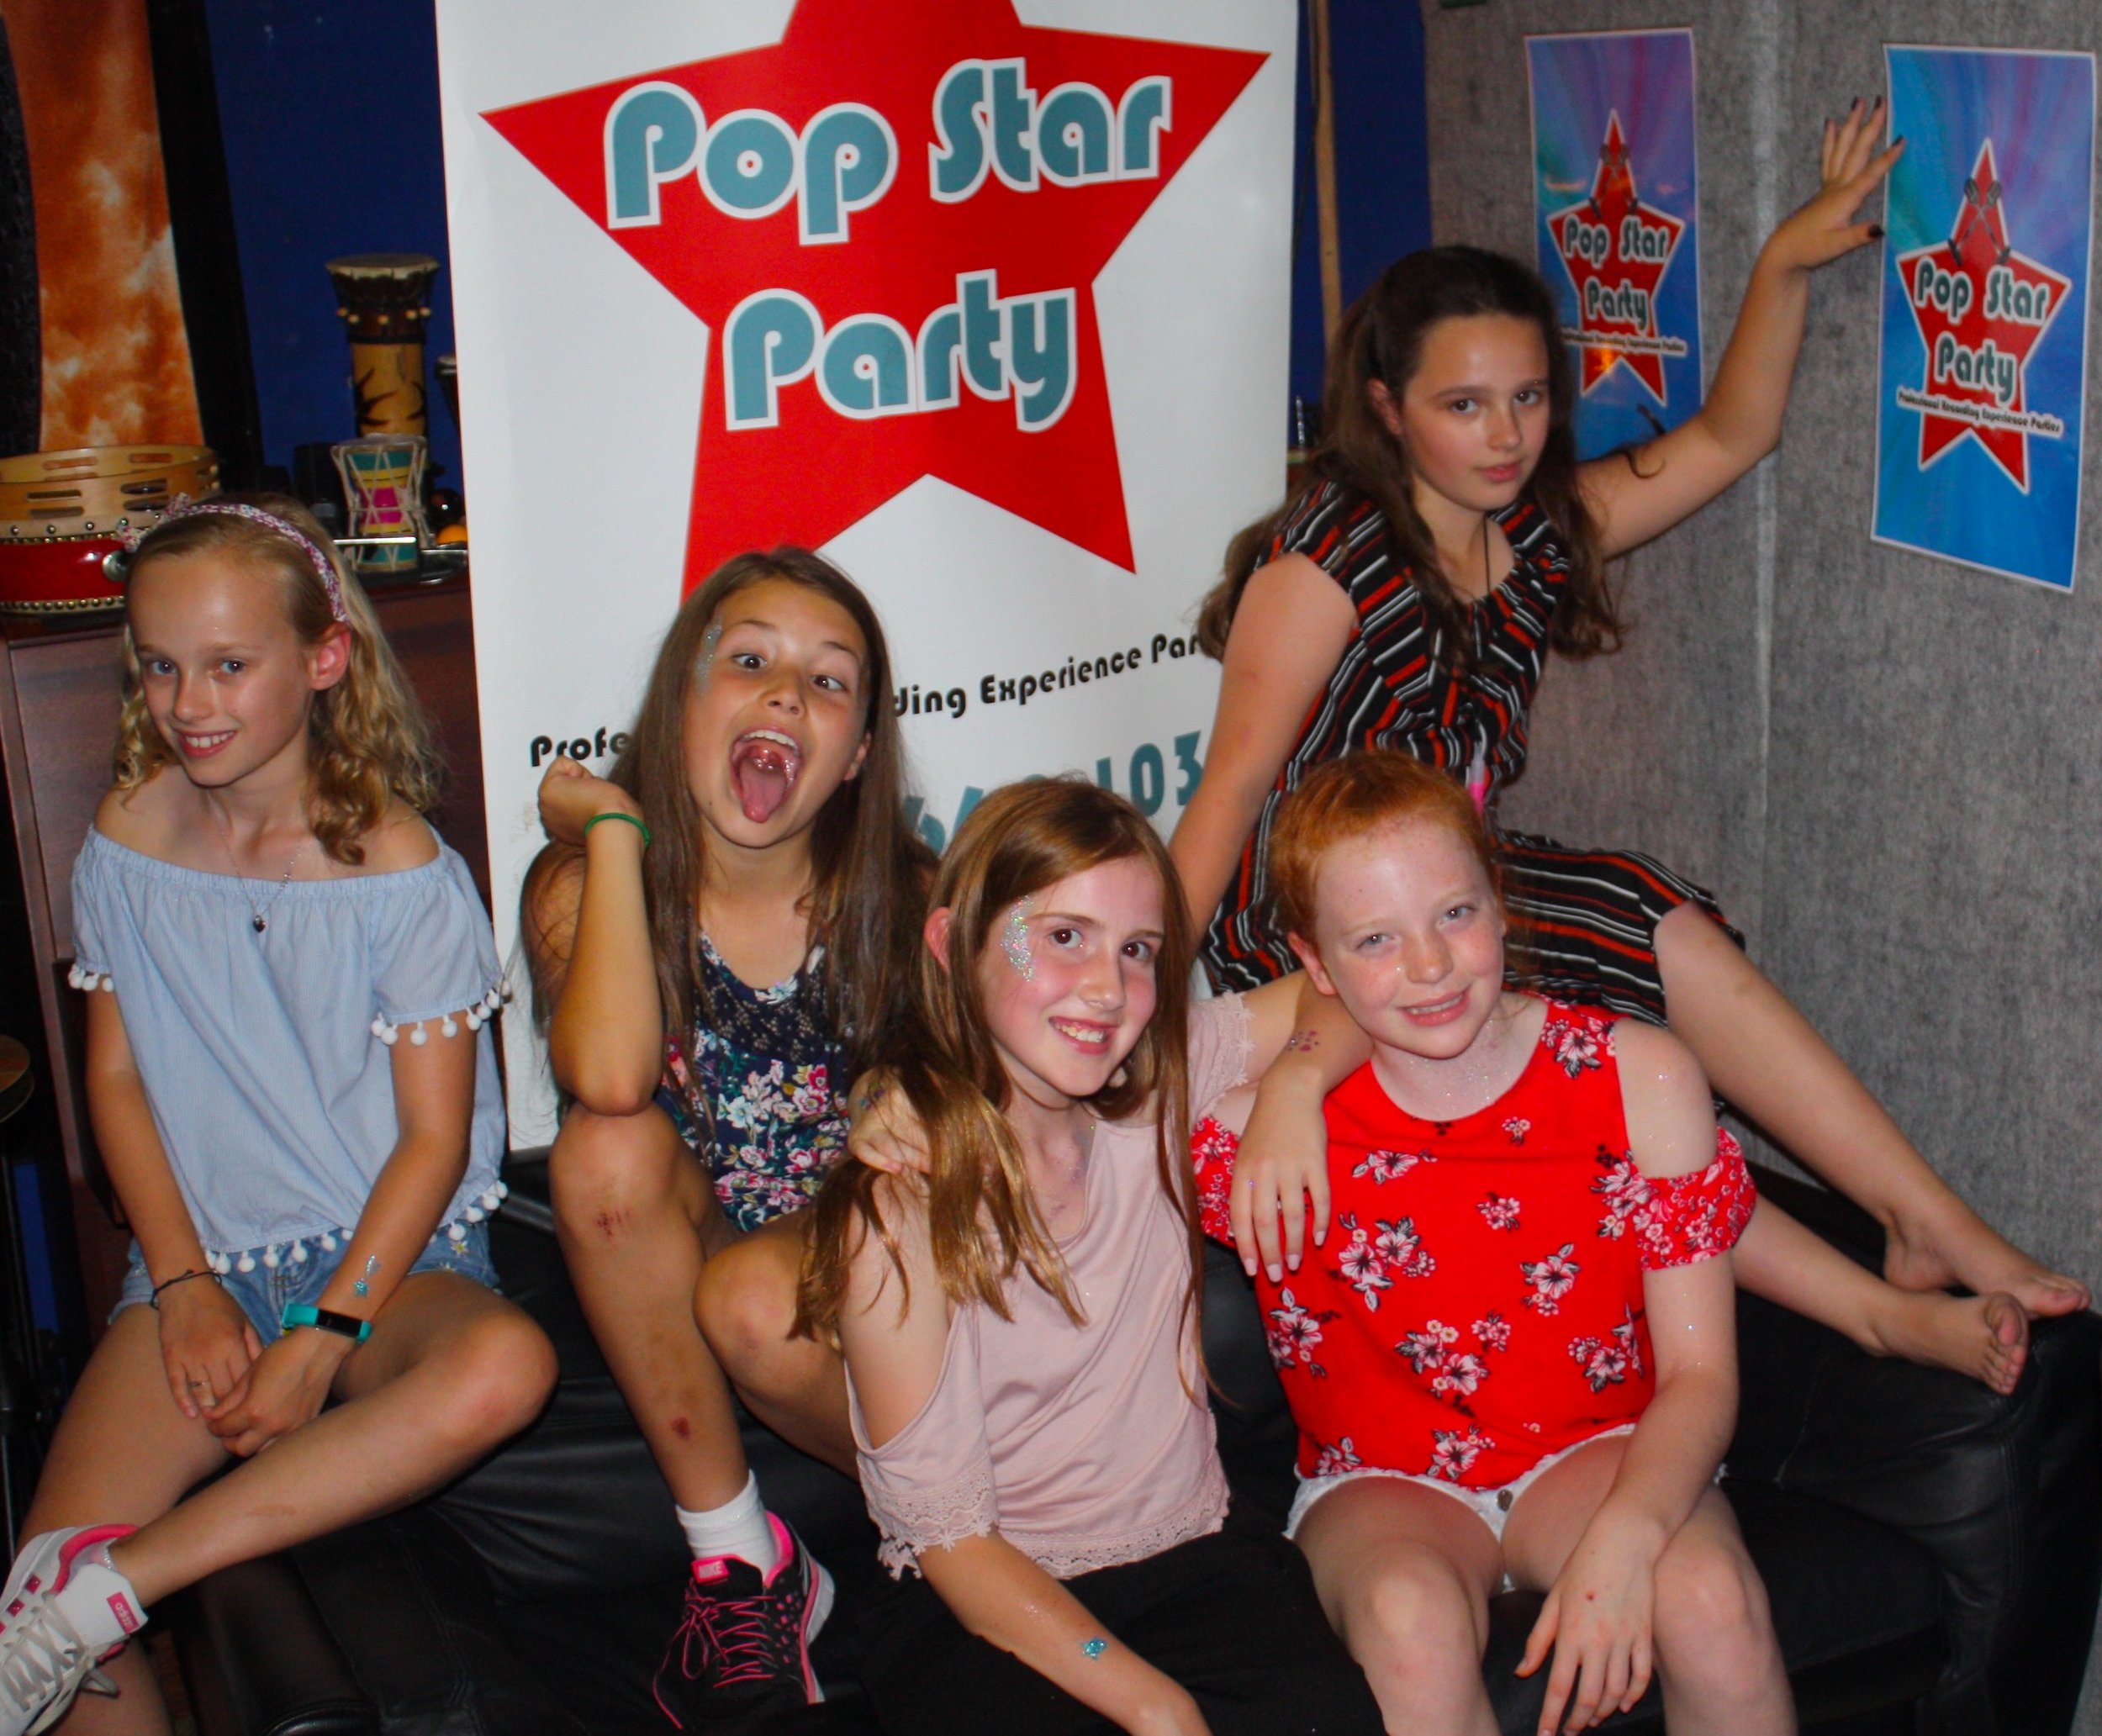 Pop Sta Party 10 year olds birthday 3.jpg